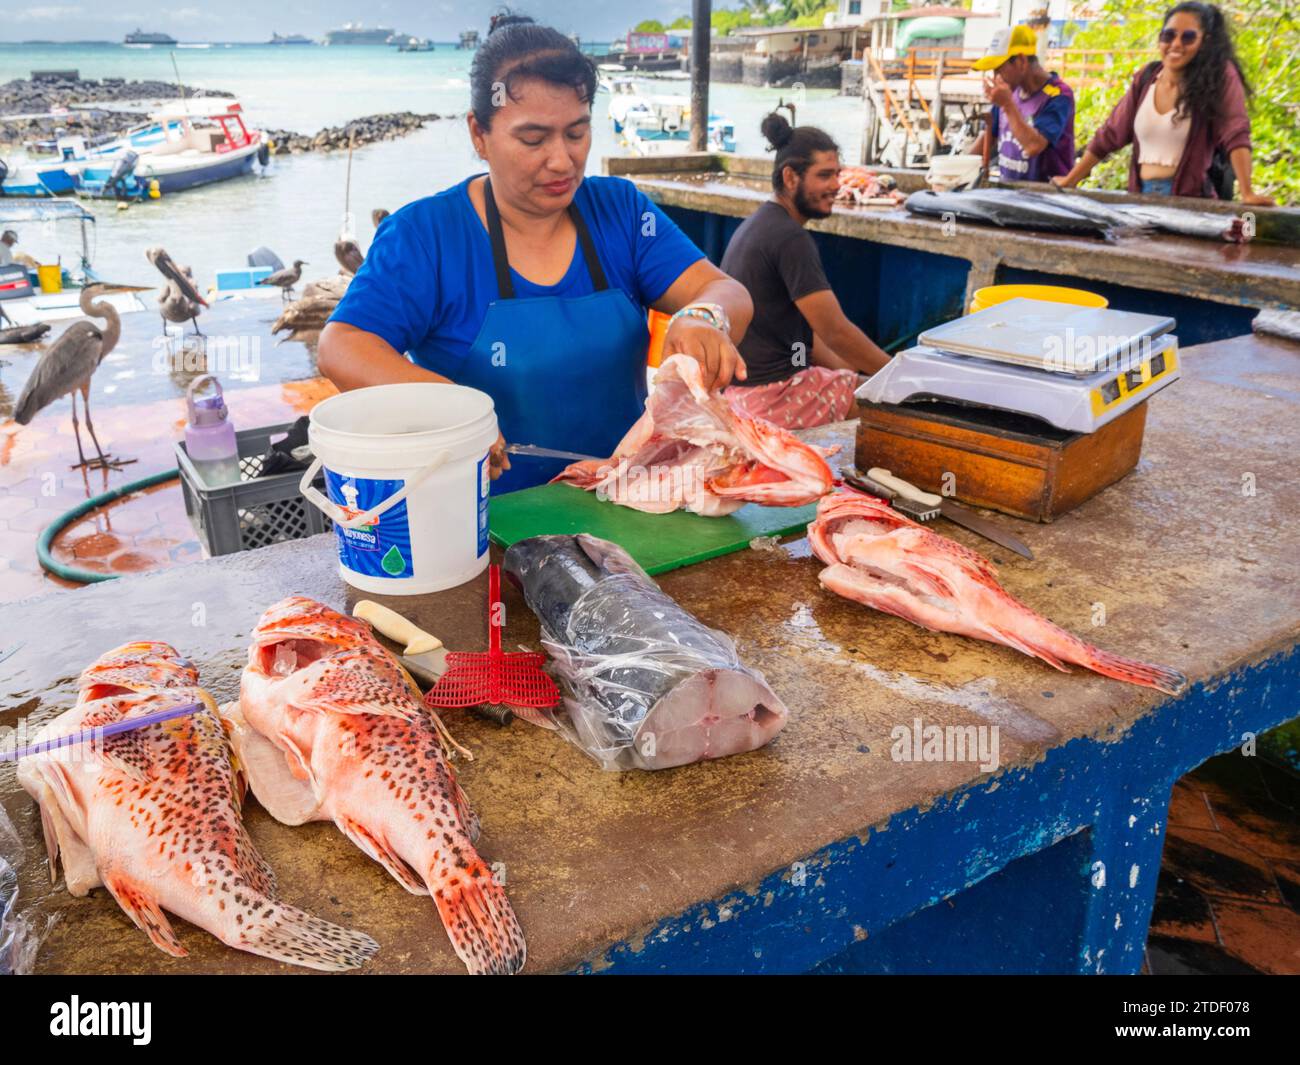 A woman preparing fish at the fish market in Puerto Azorra, Santa Cruz Island, Galapagos Islands, UNESCO World Heritage Site, Ecuador, South America Stock Photo